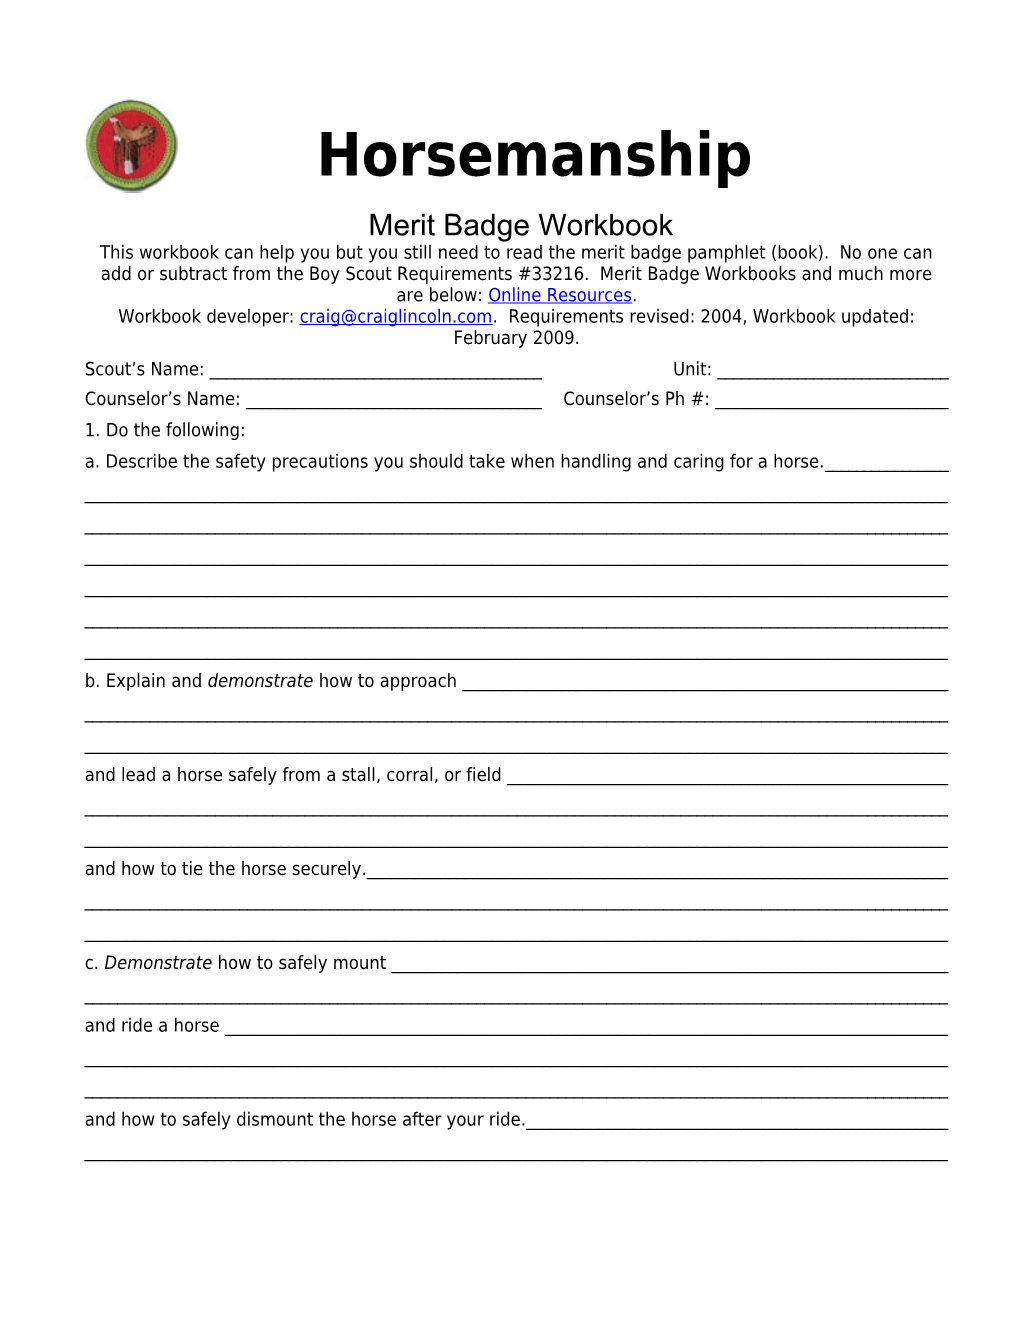 Horsemanship P. 1 Merit Badge Workbookscout's Name: ______